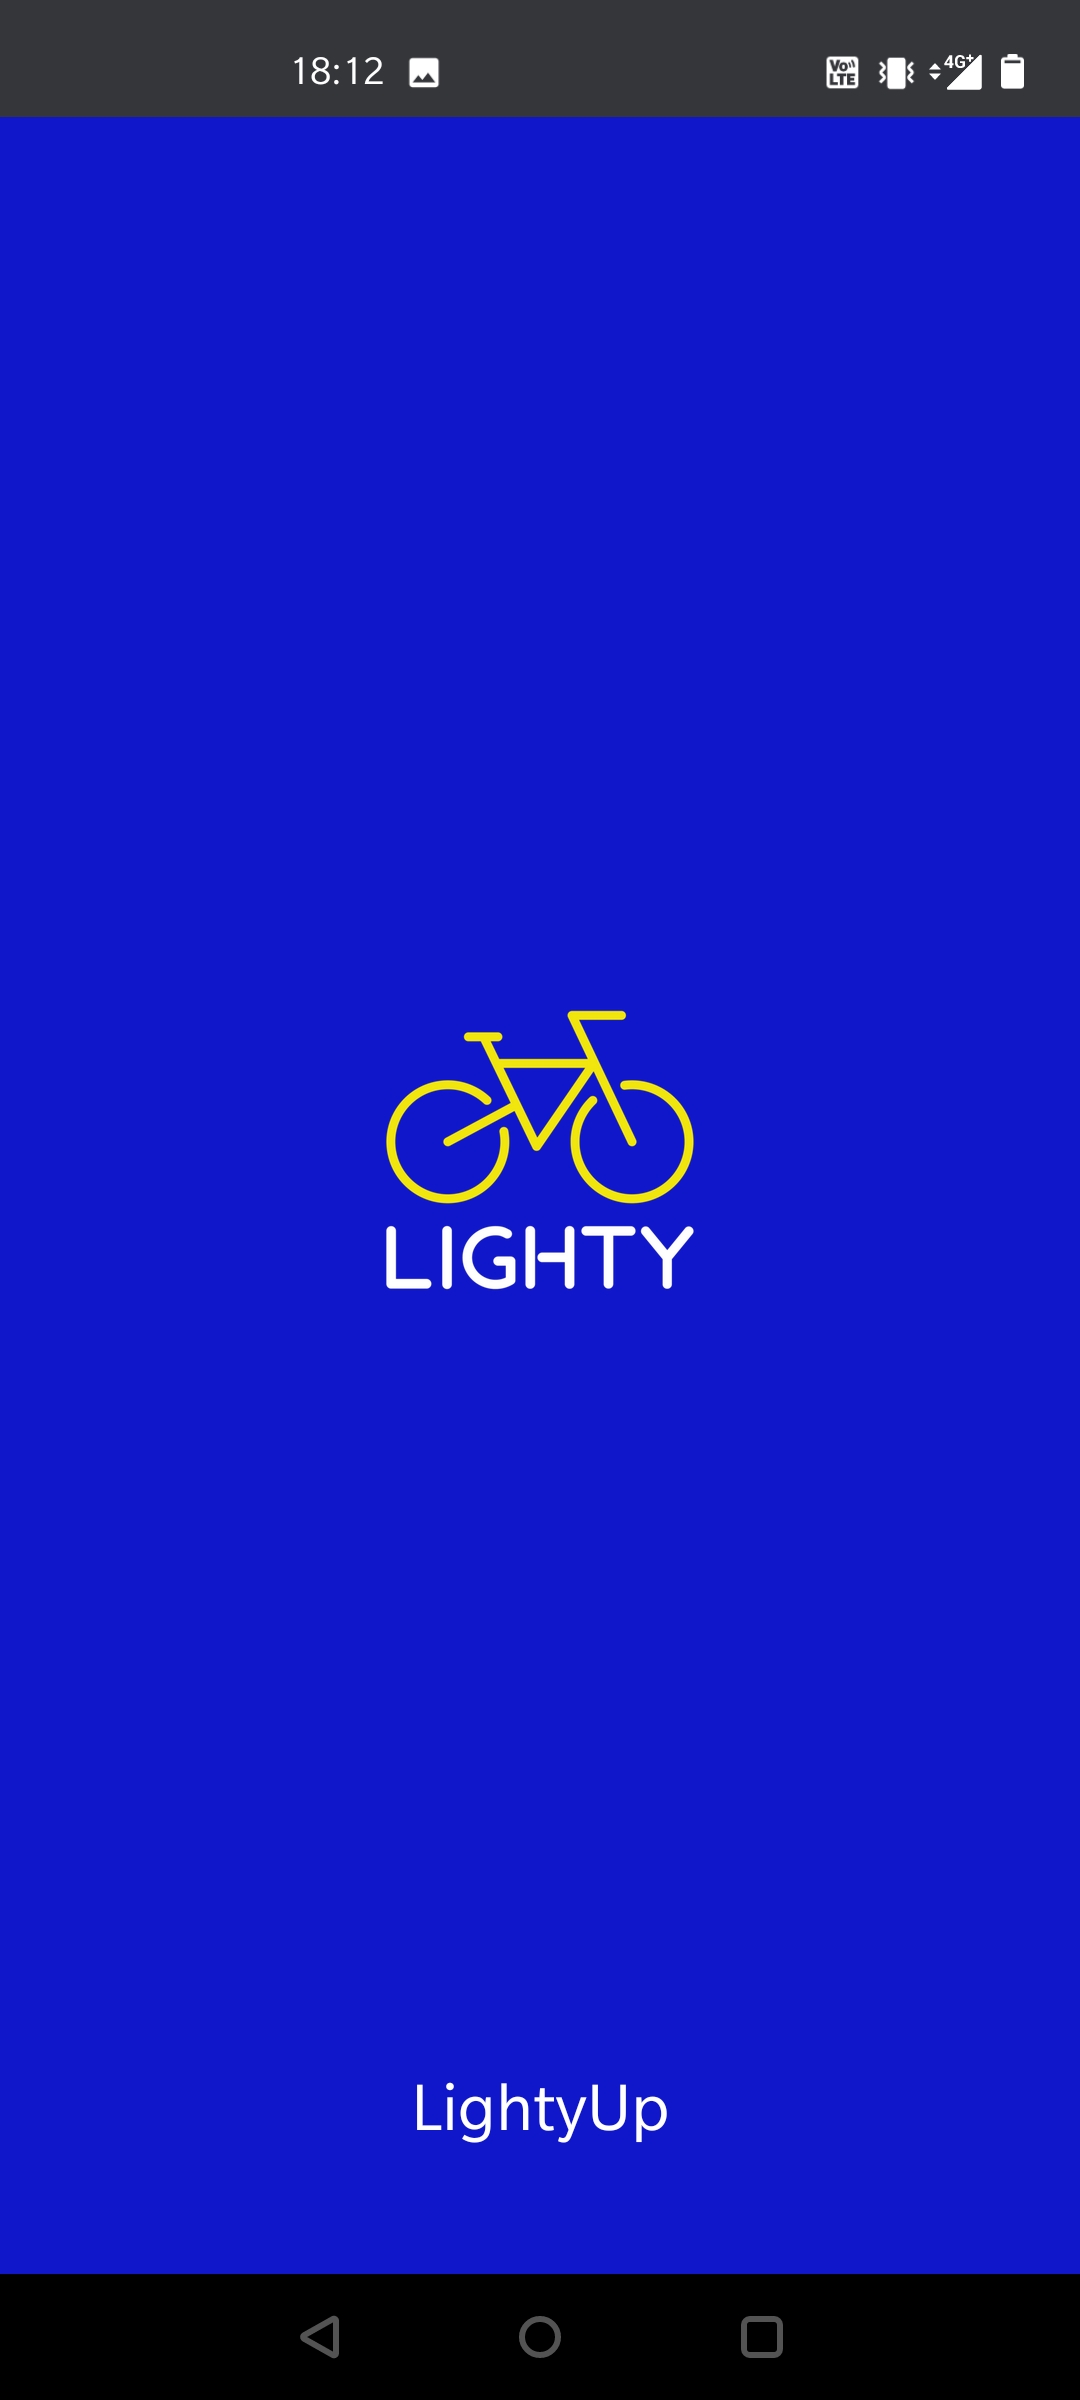 LightyUp app